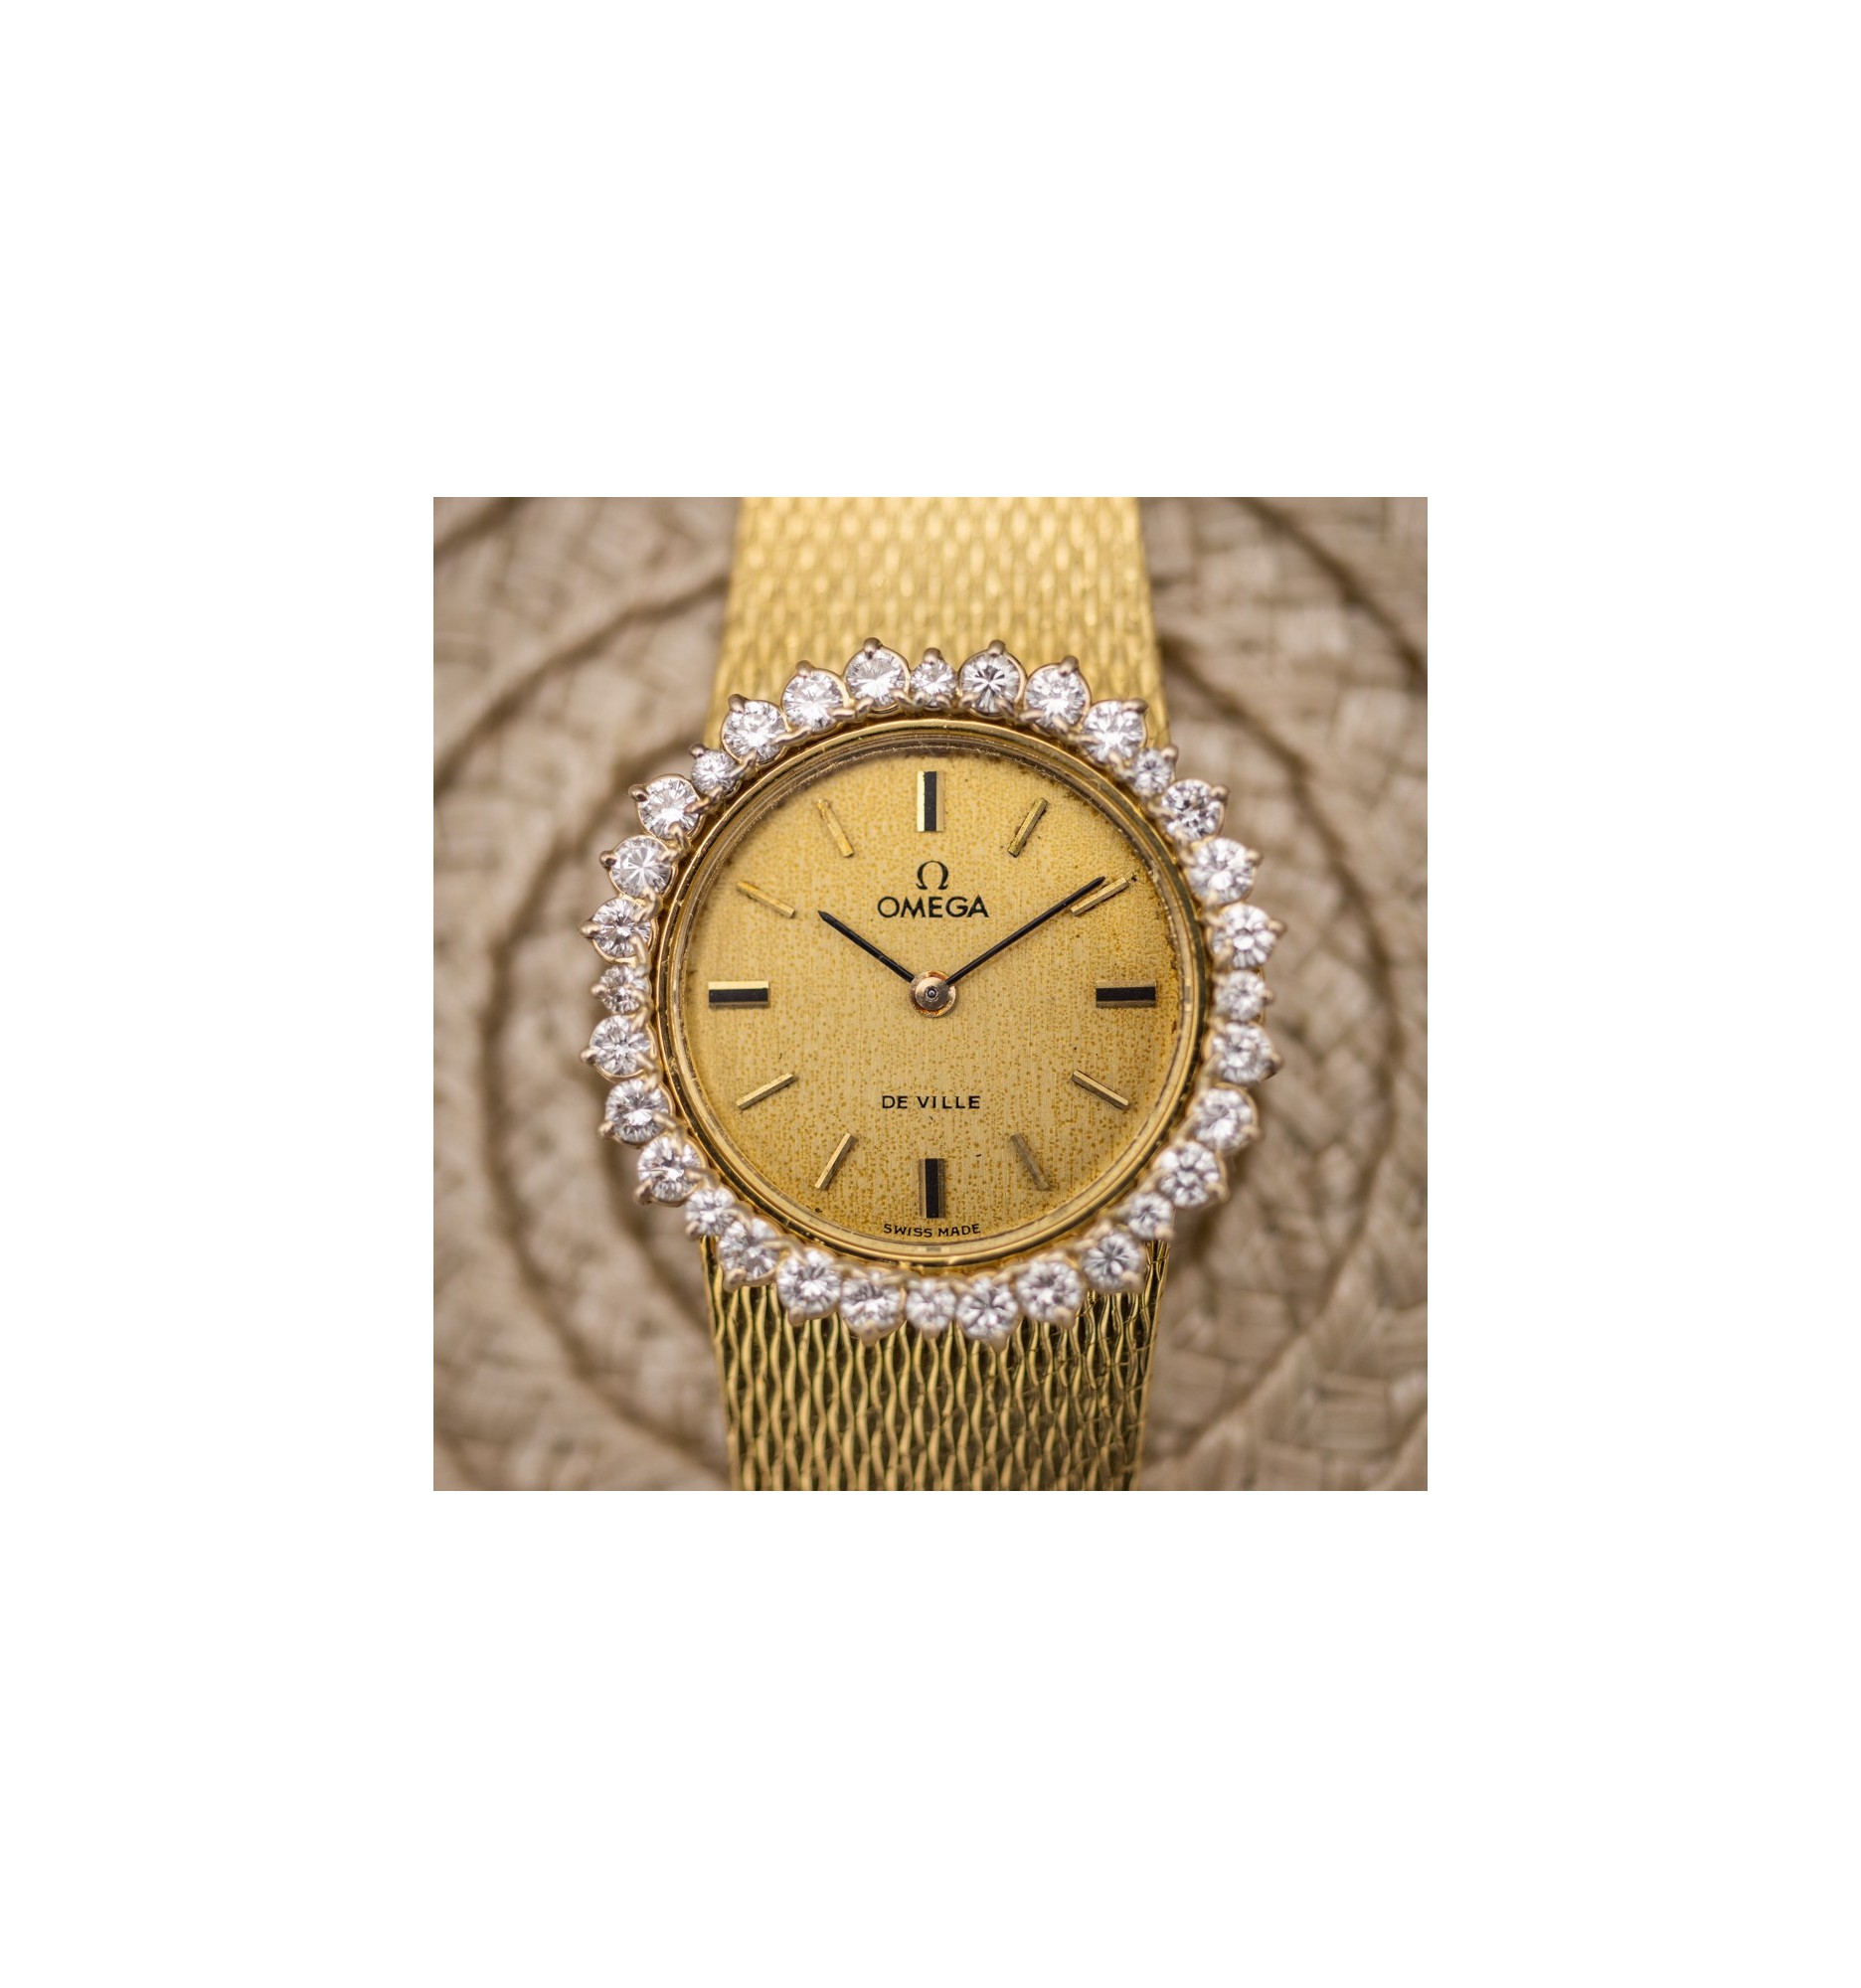 Omega Vintage Ladies Gold Watches | vlr.eng.br